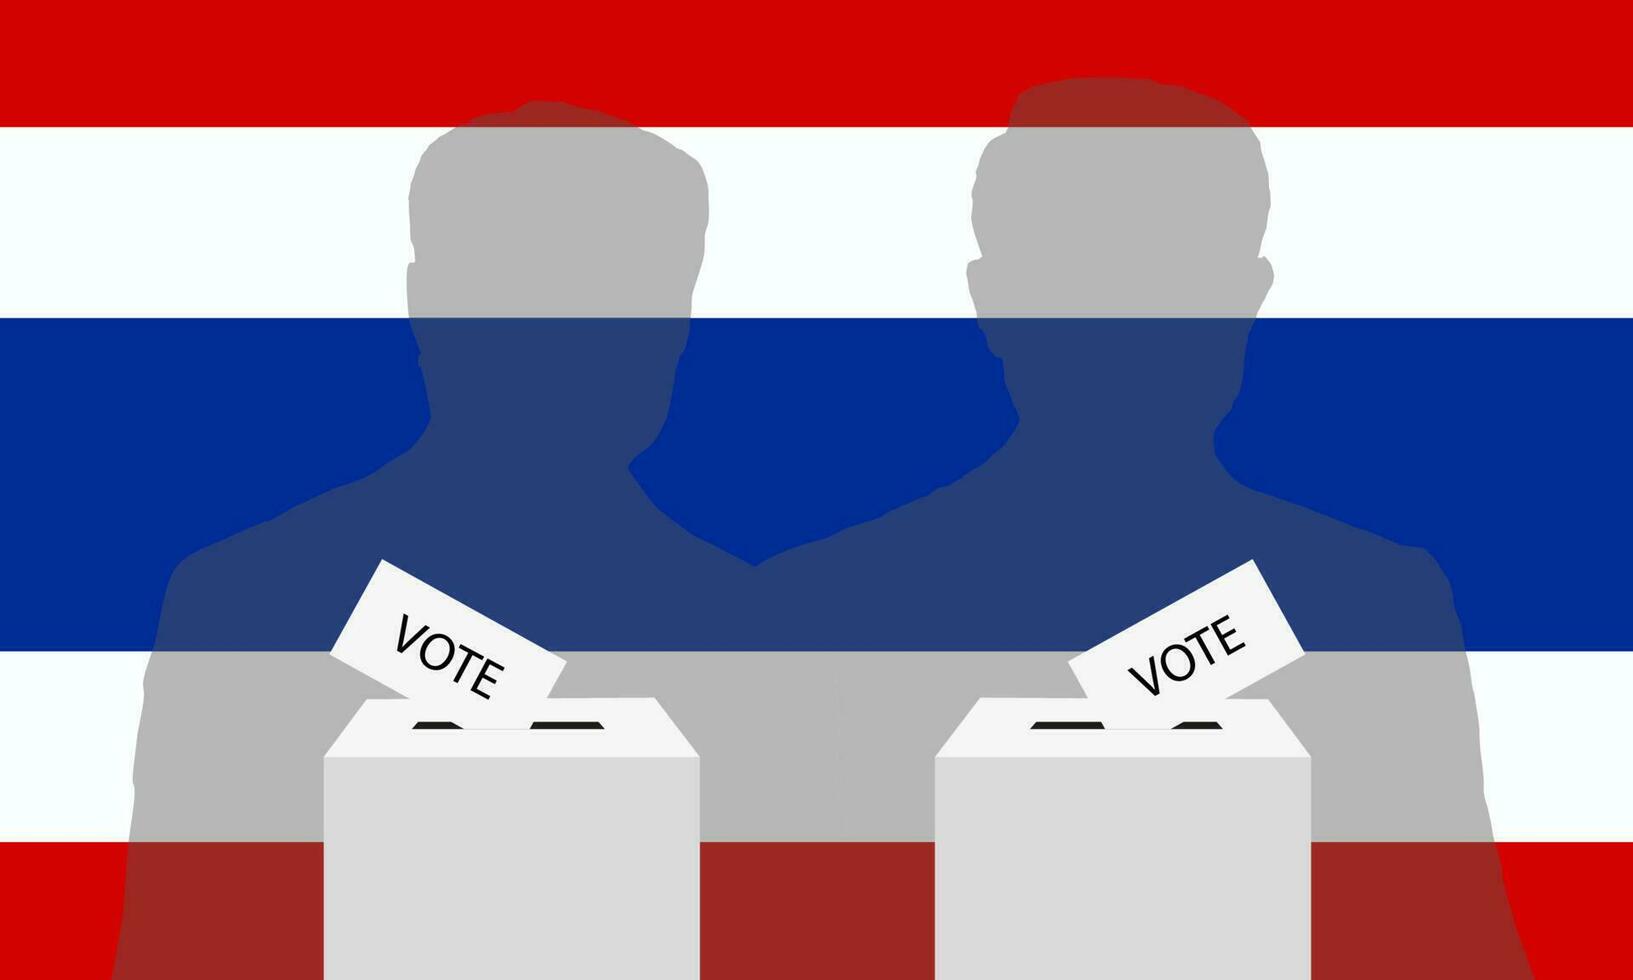 verkiezing stemmen Thailand vector